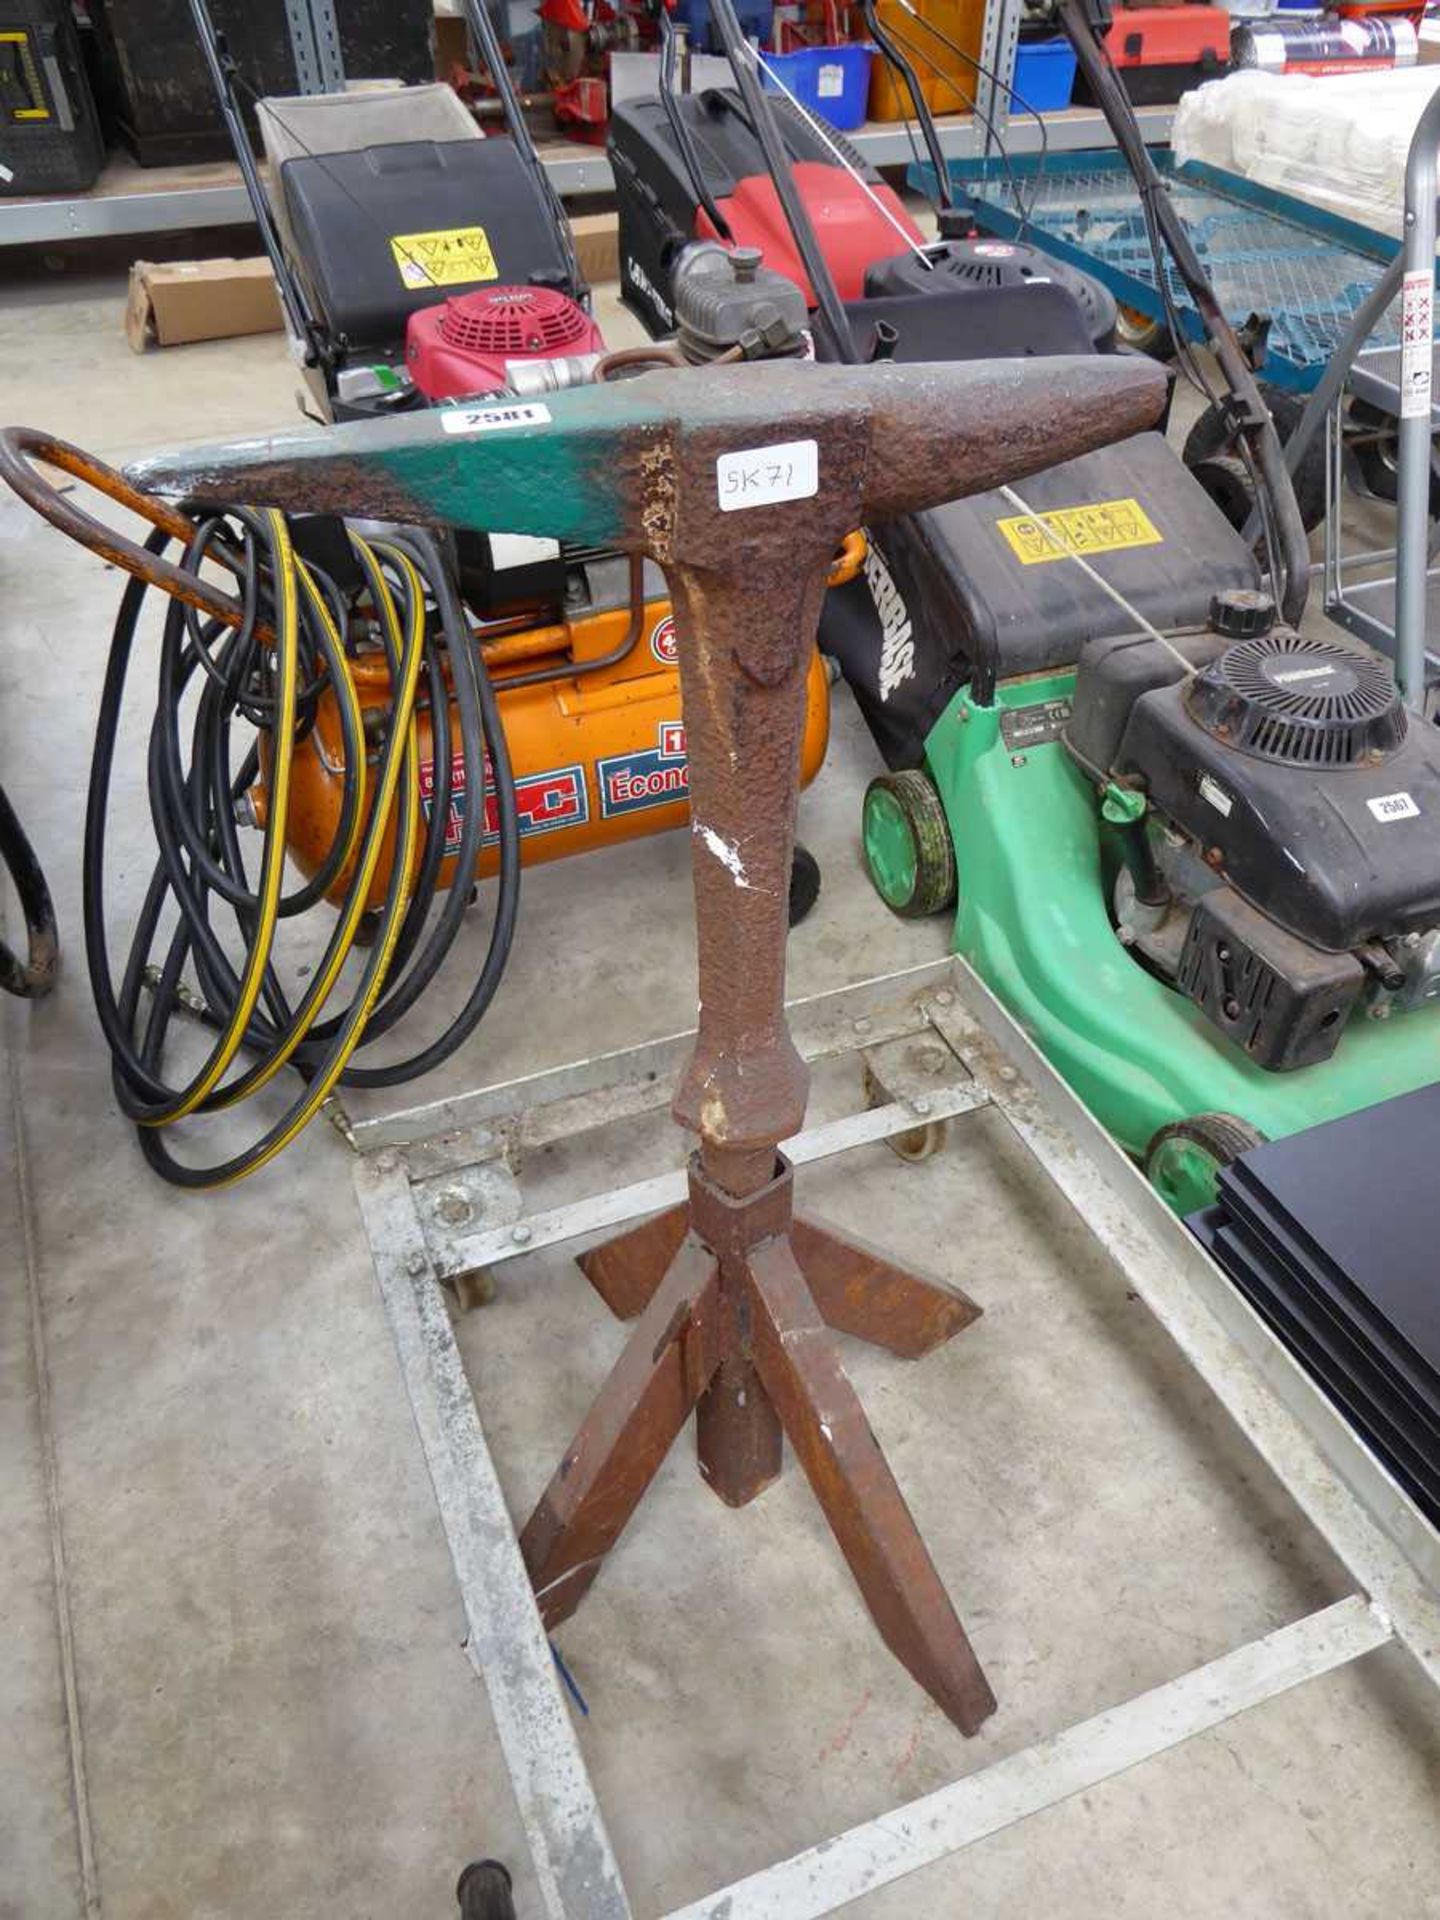 Blacksmiths anvil on stand